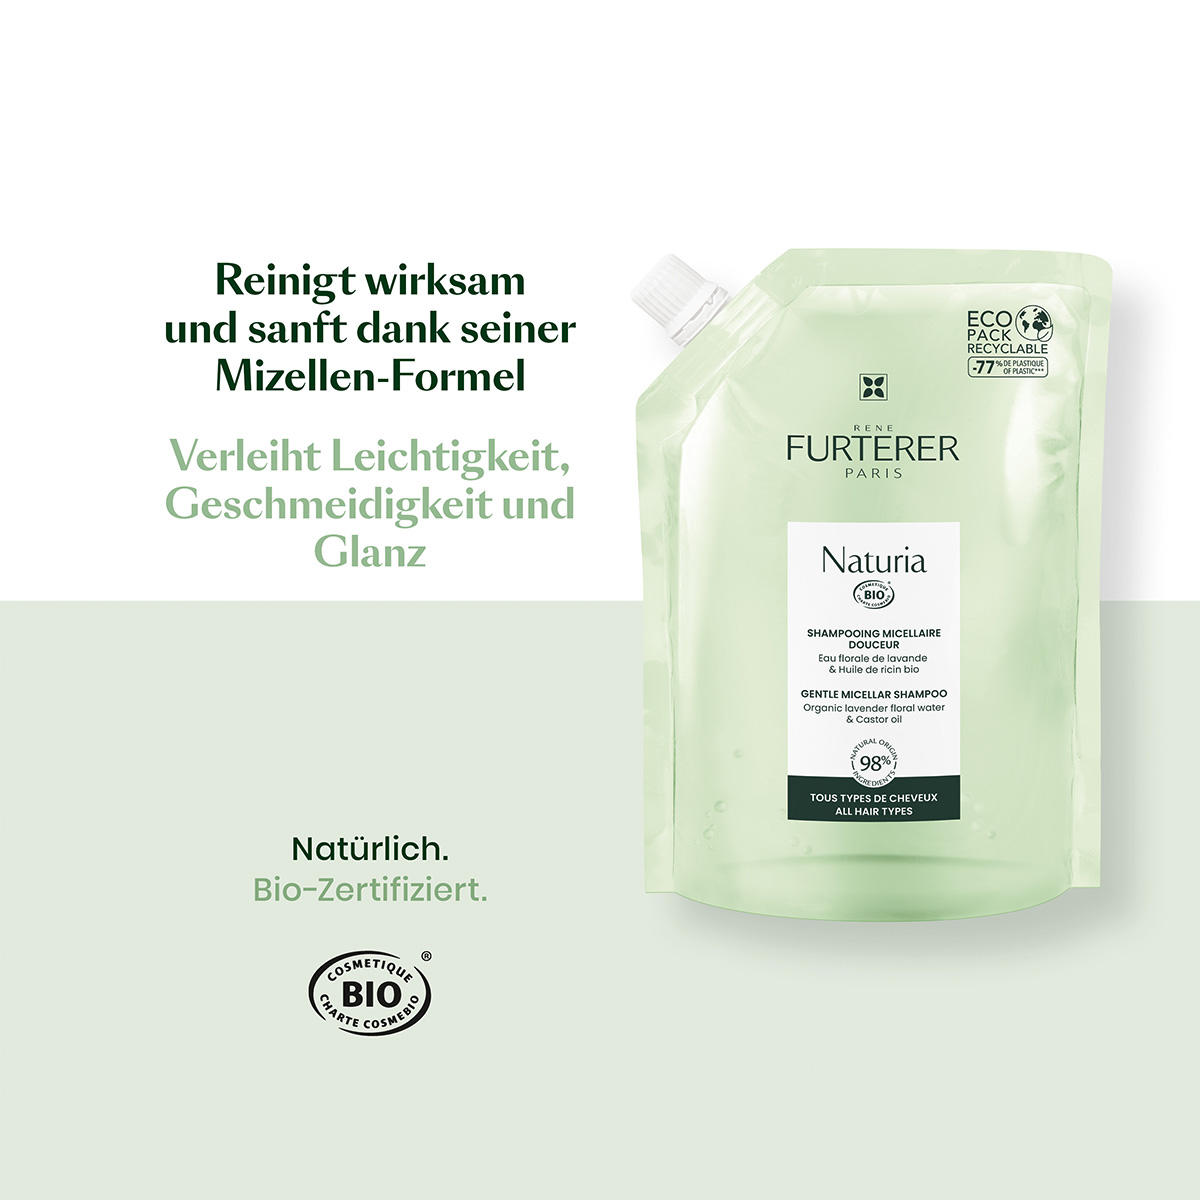 René Furterer Naturia Shampooing micellaire doux Recharge 400 ml - 7